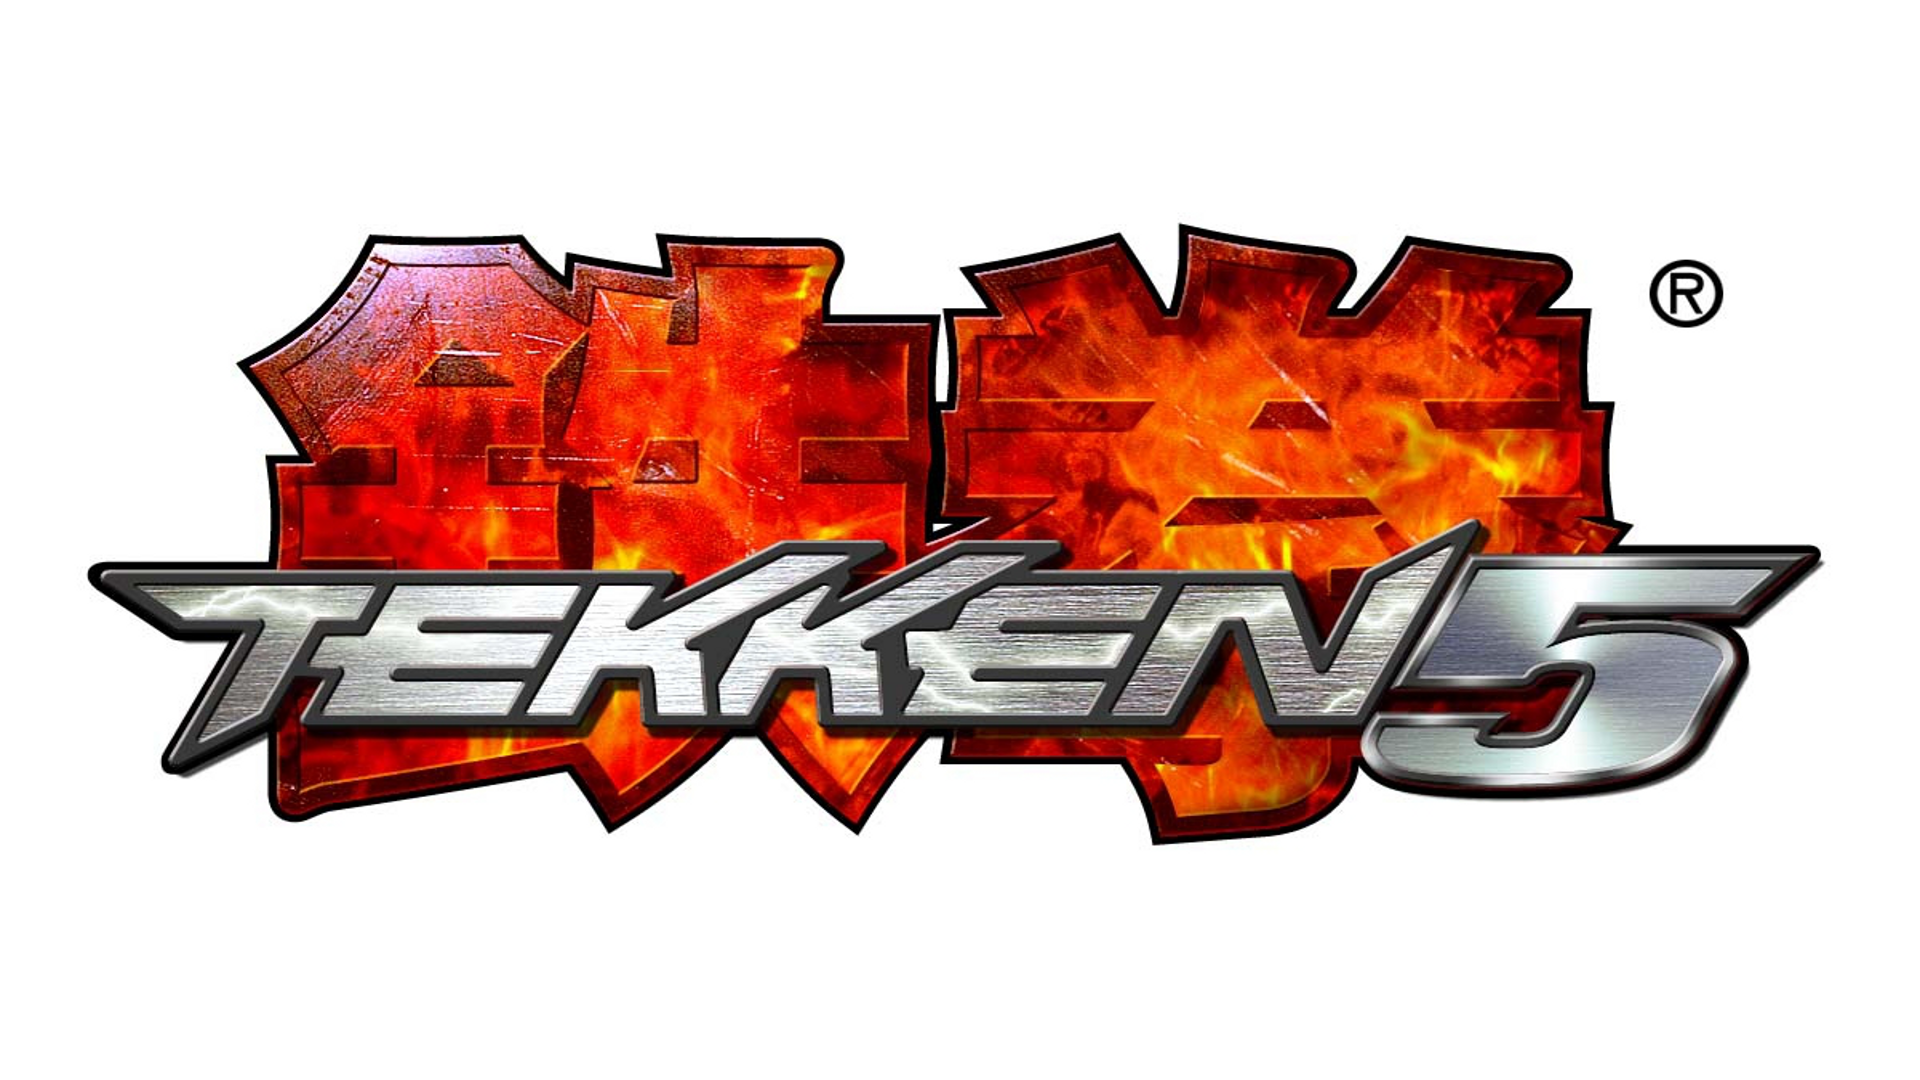 Tekken 5 Logo